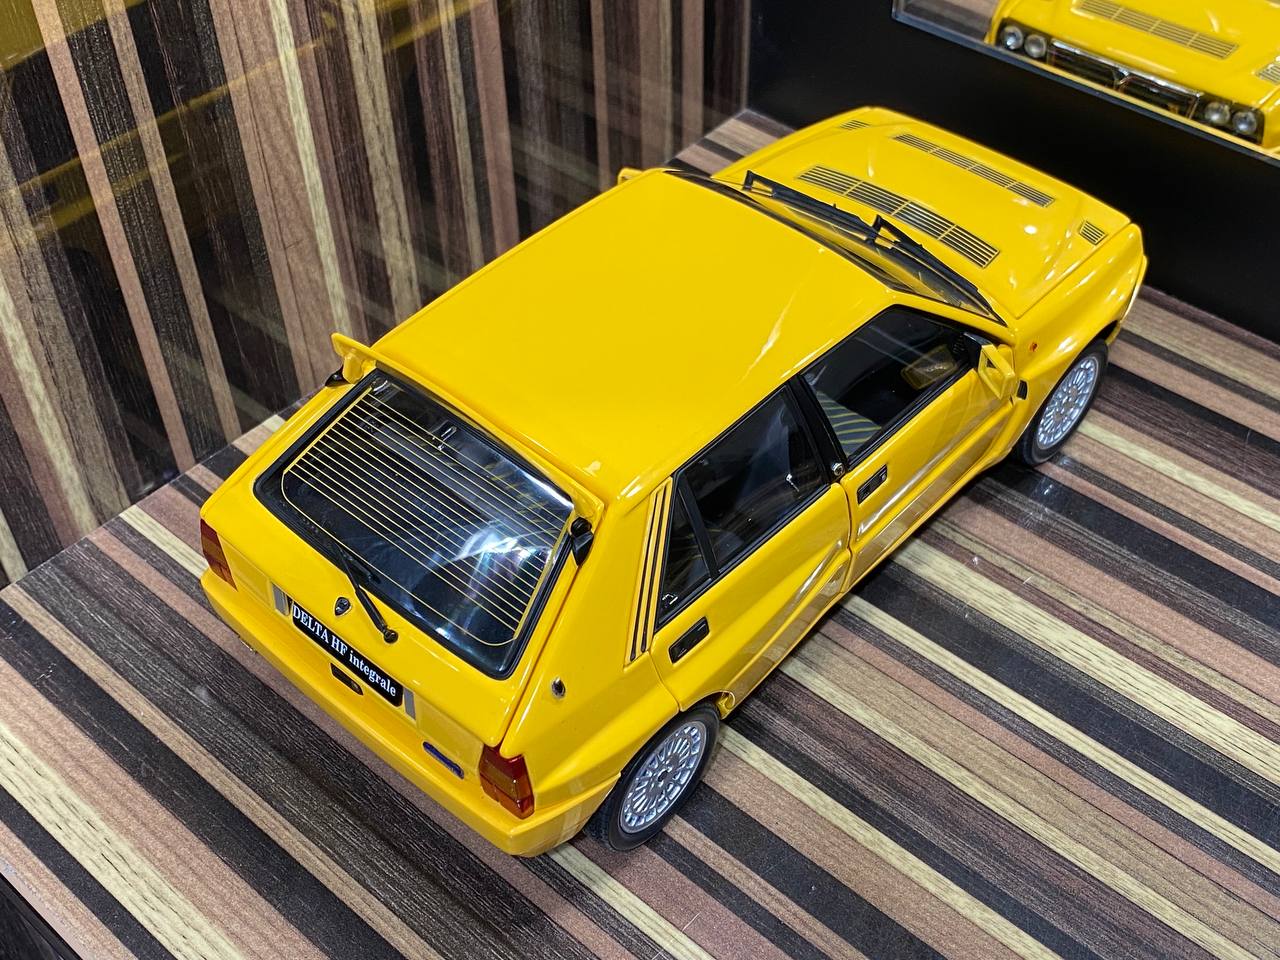 1/18 Diecast Lancia Delta HF Integrale Yellow Kyosho Scale Model Car|Sold in Dturman.com Dubai UAE.